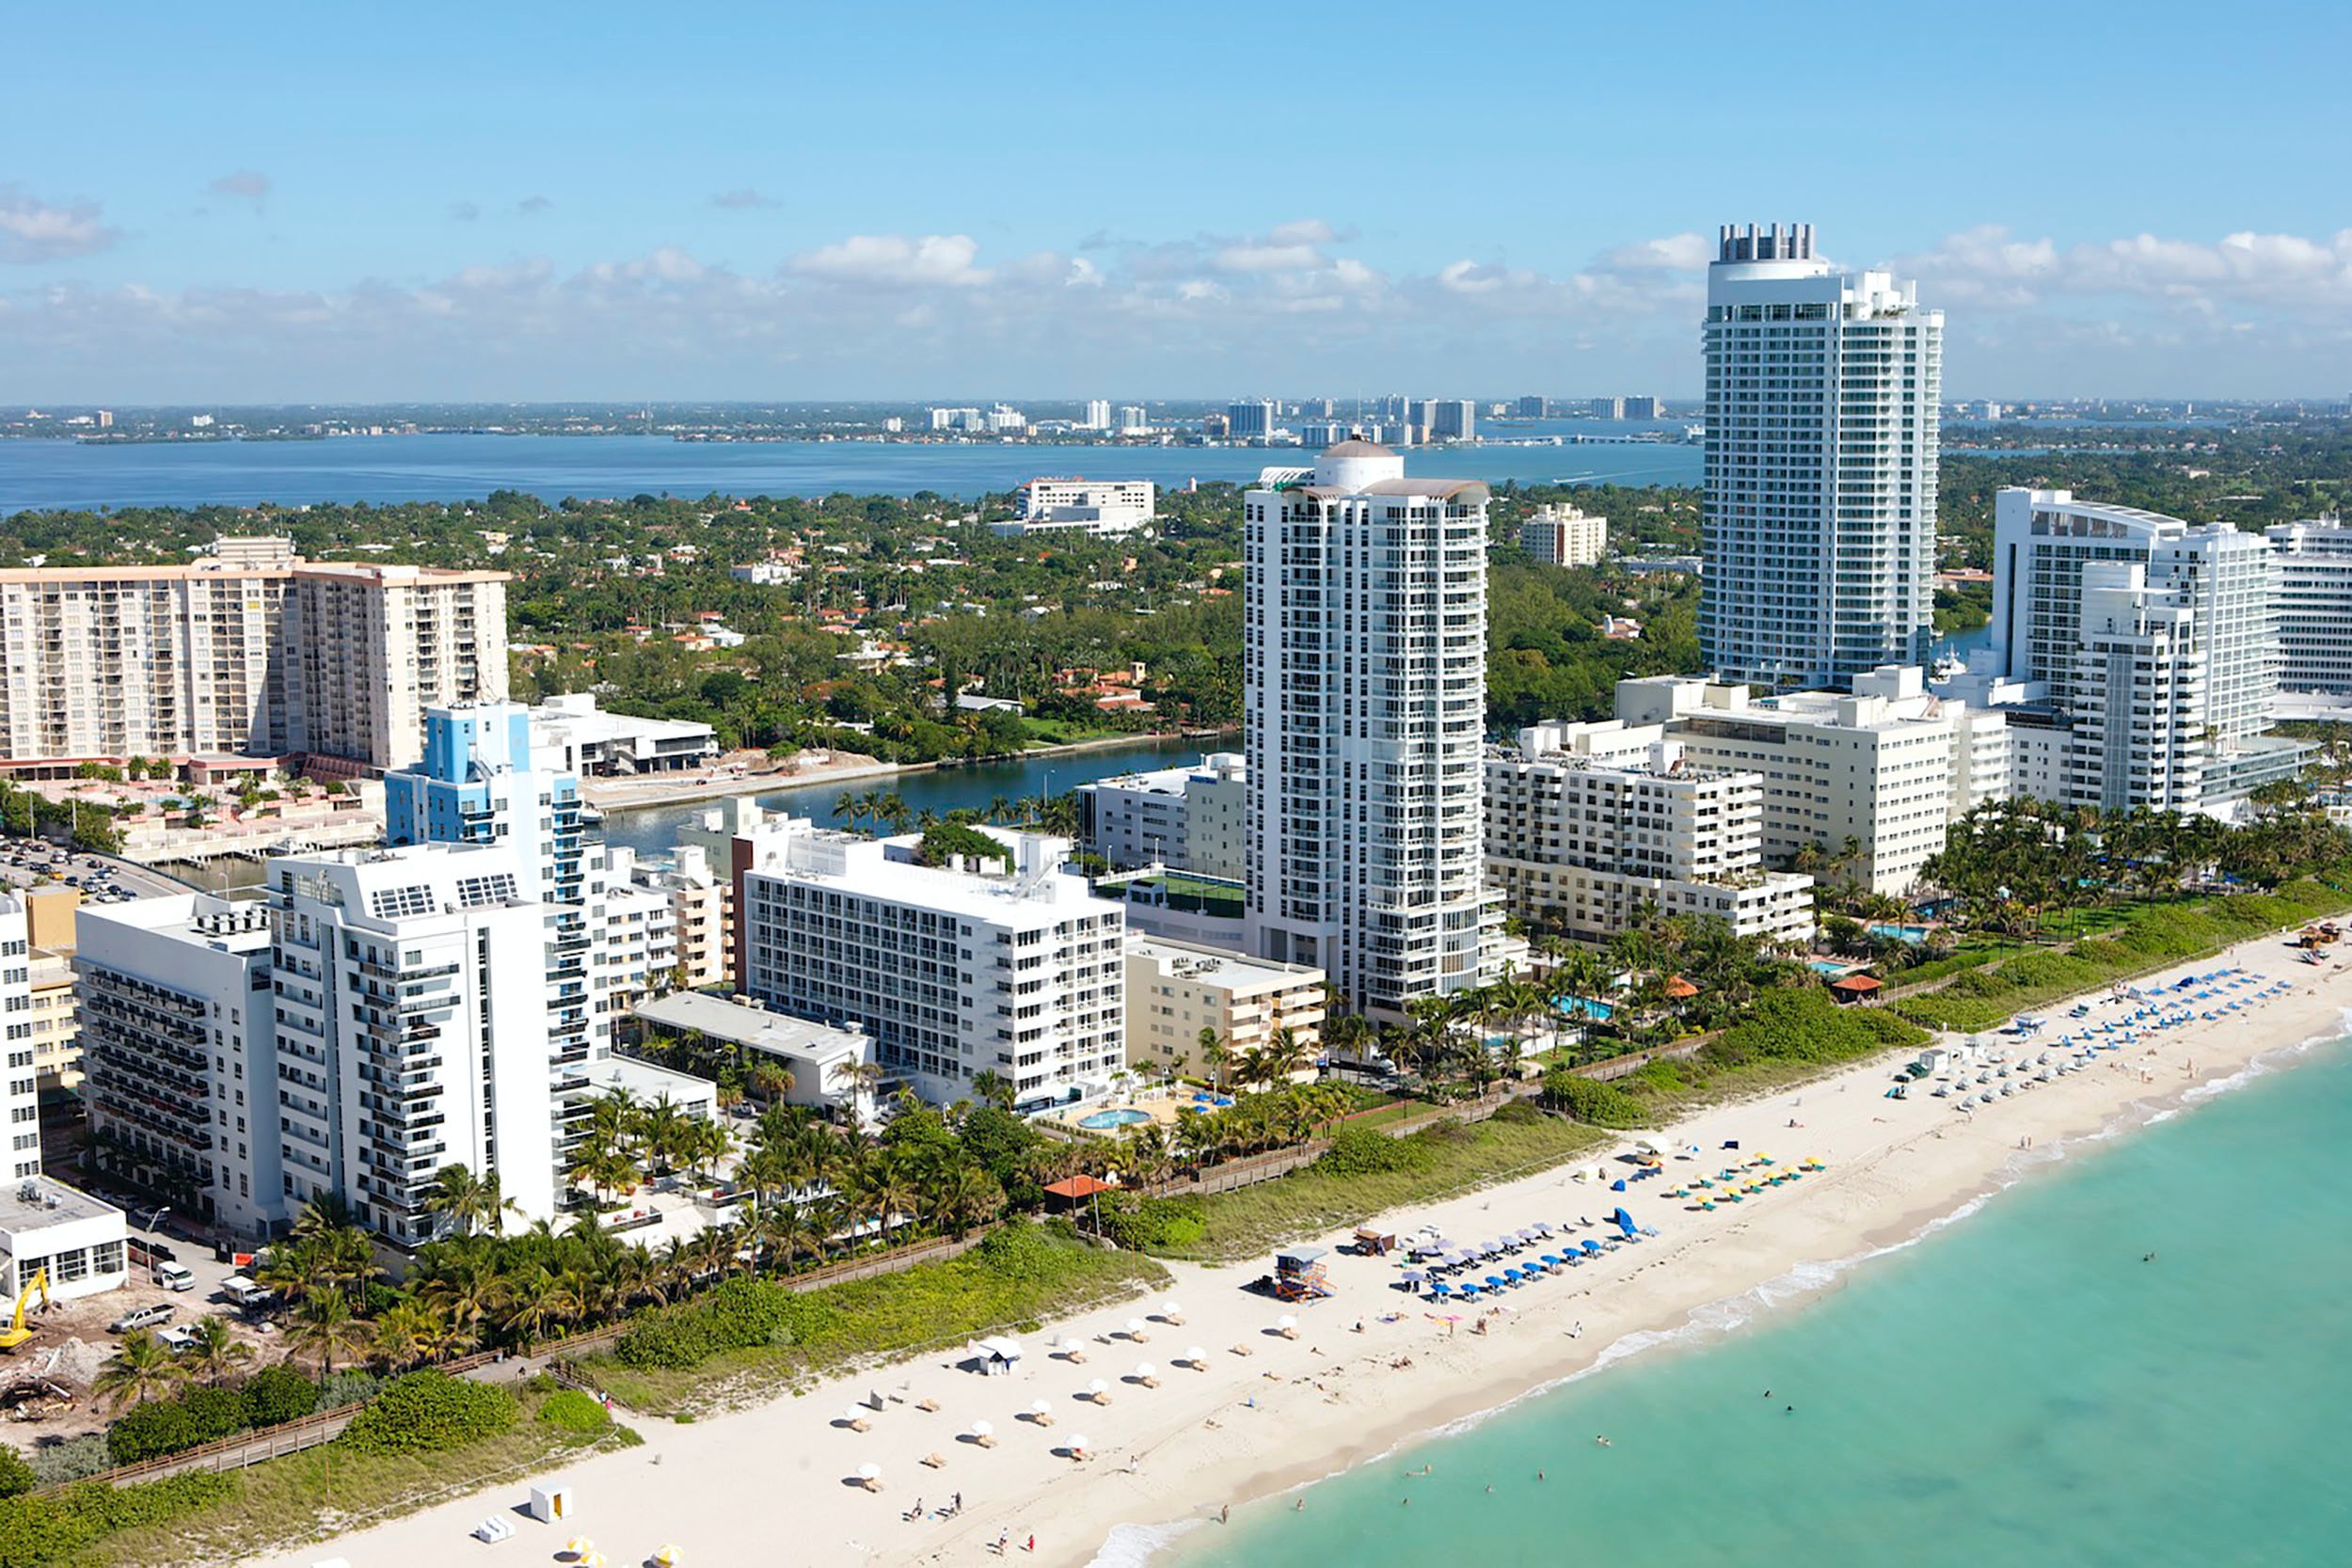 luxury condominiums overlooking the beach in florida